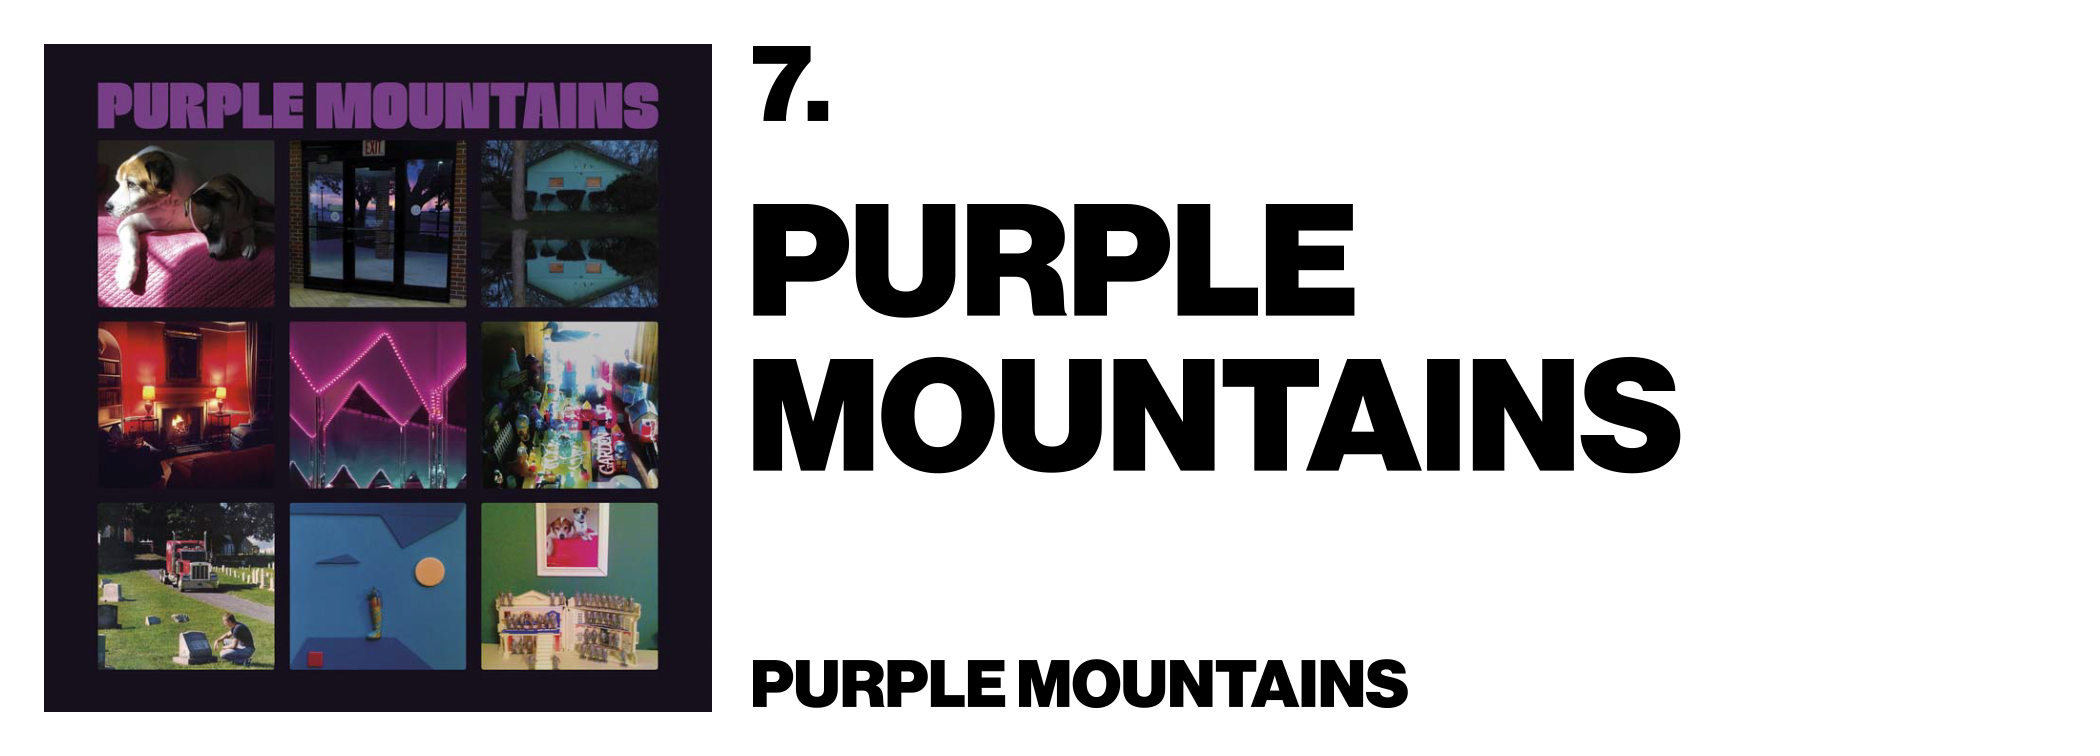 1576016481143-7-Purple-Mountains-Purple-Mountains